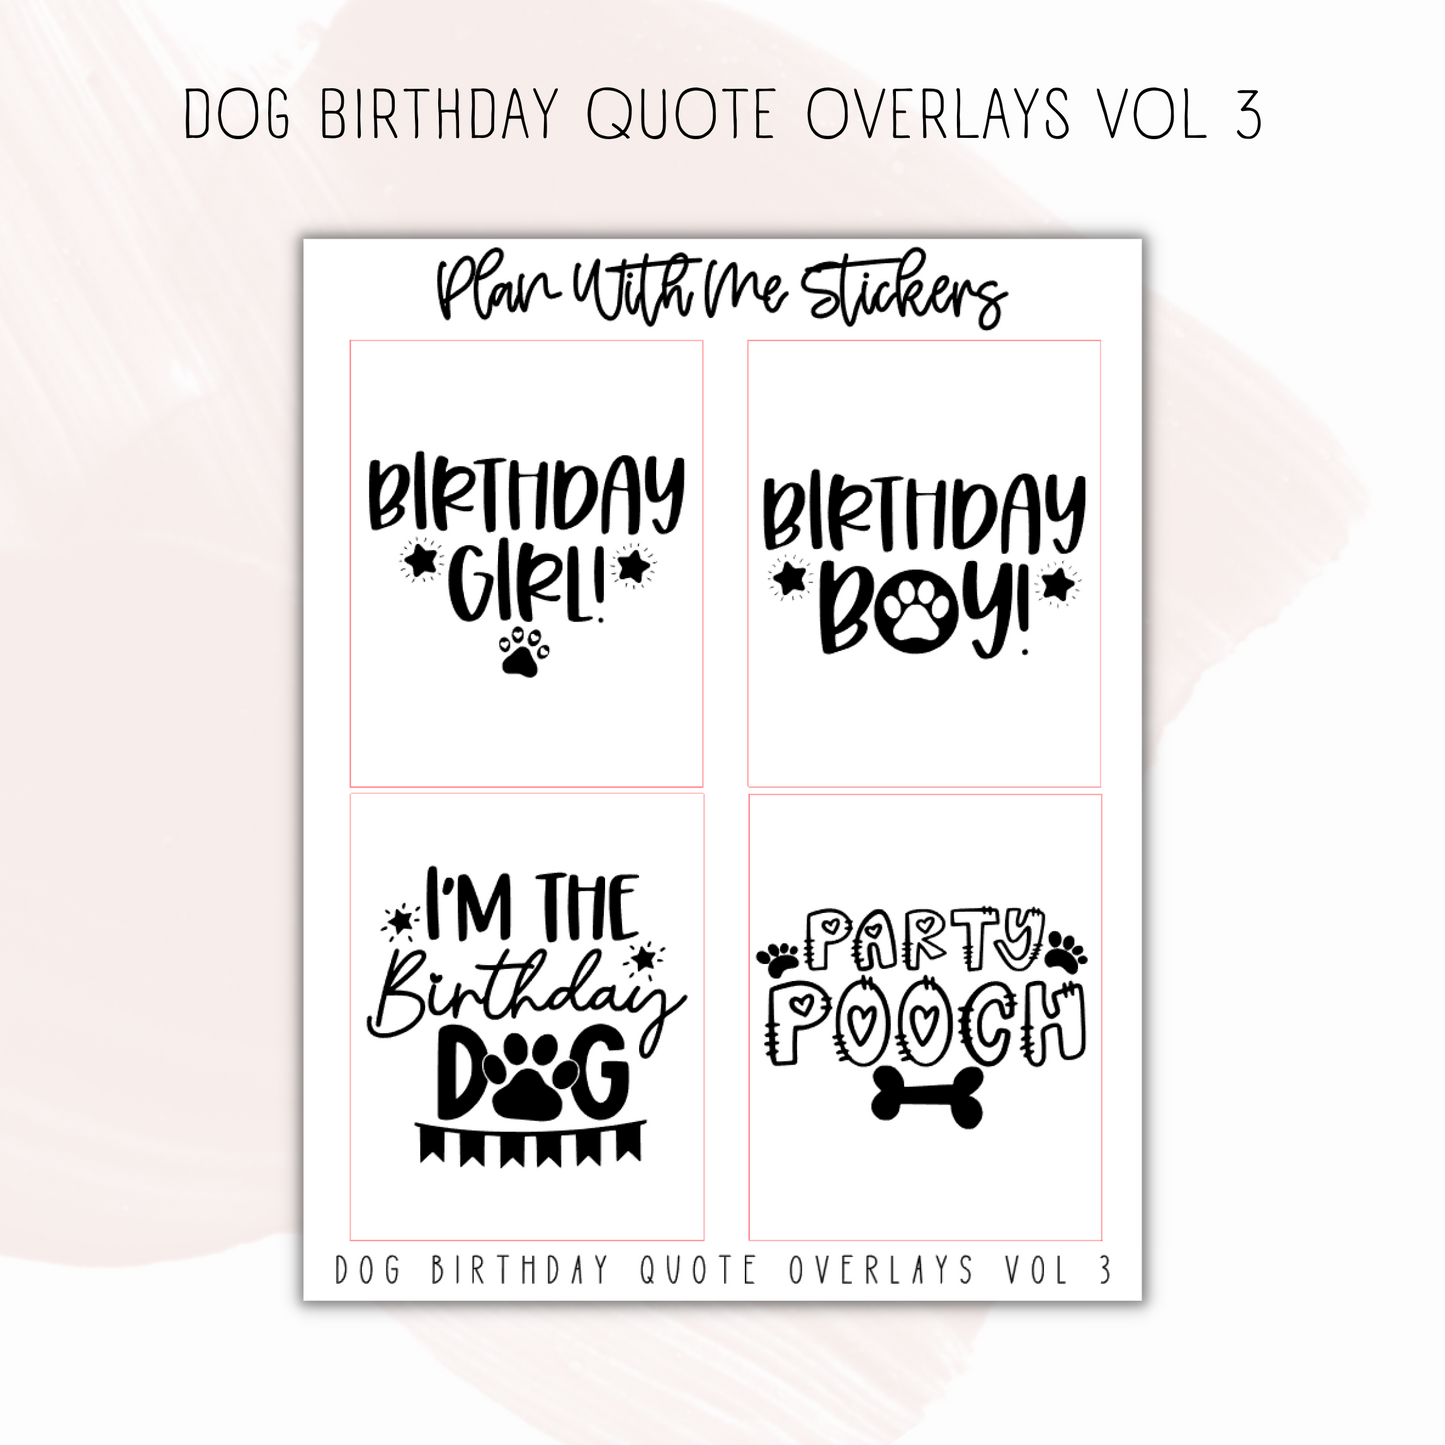 Dog Birthday Quote Overlays Vol 3